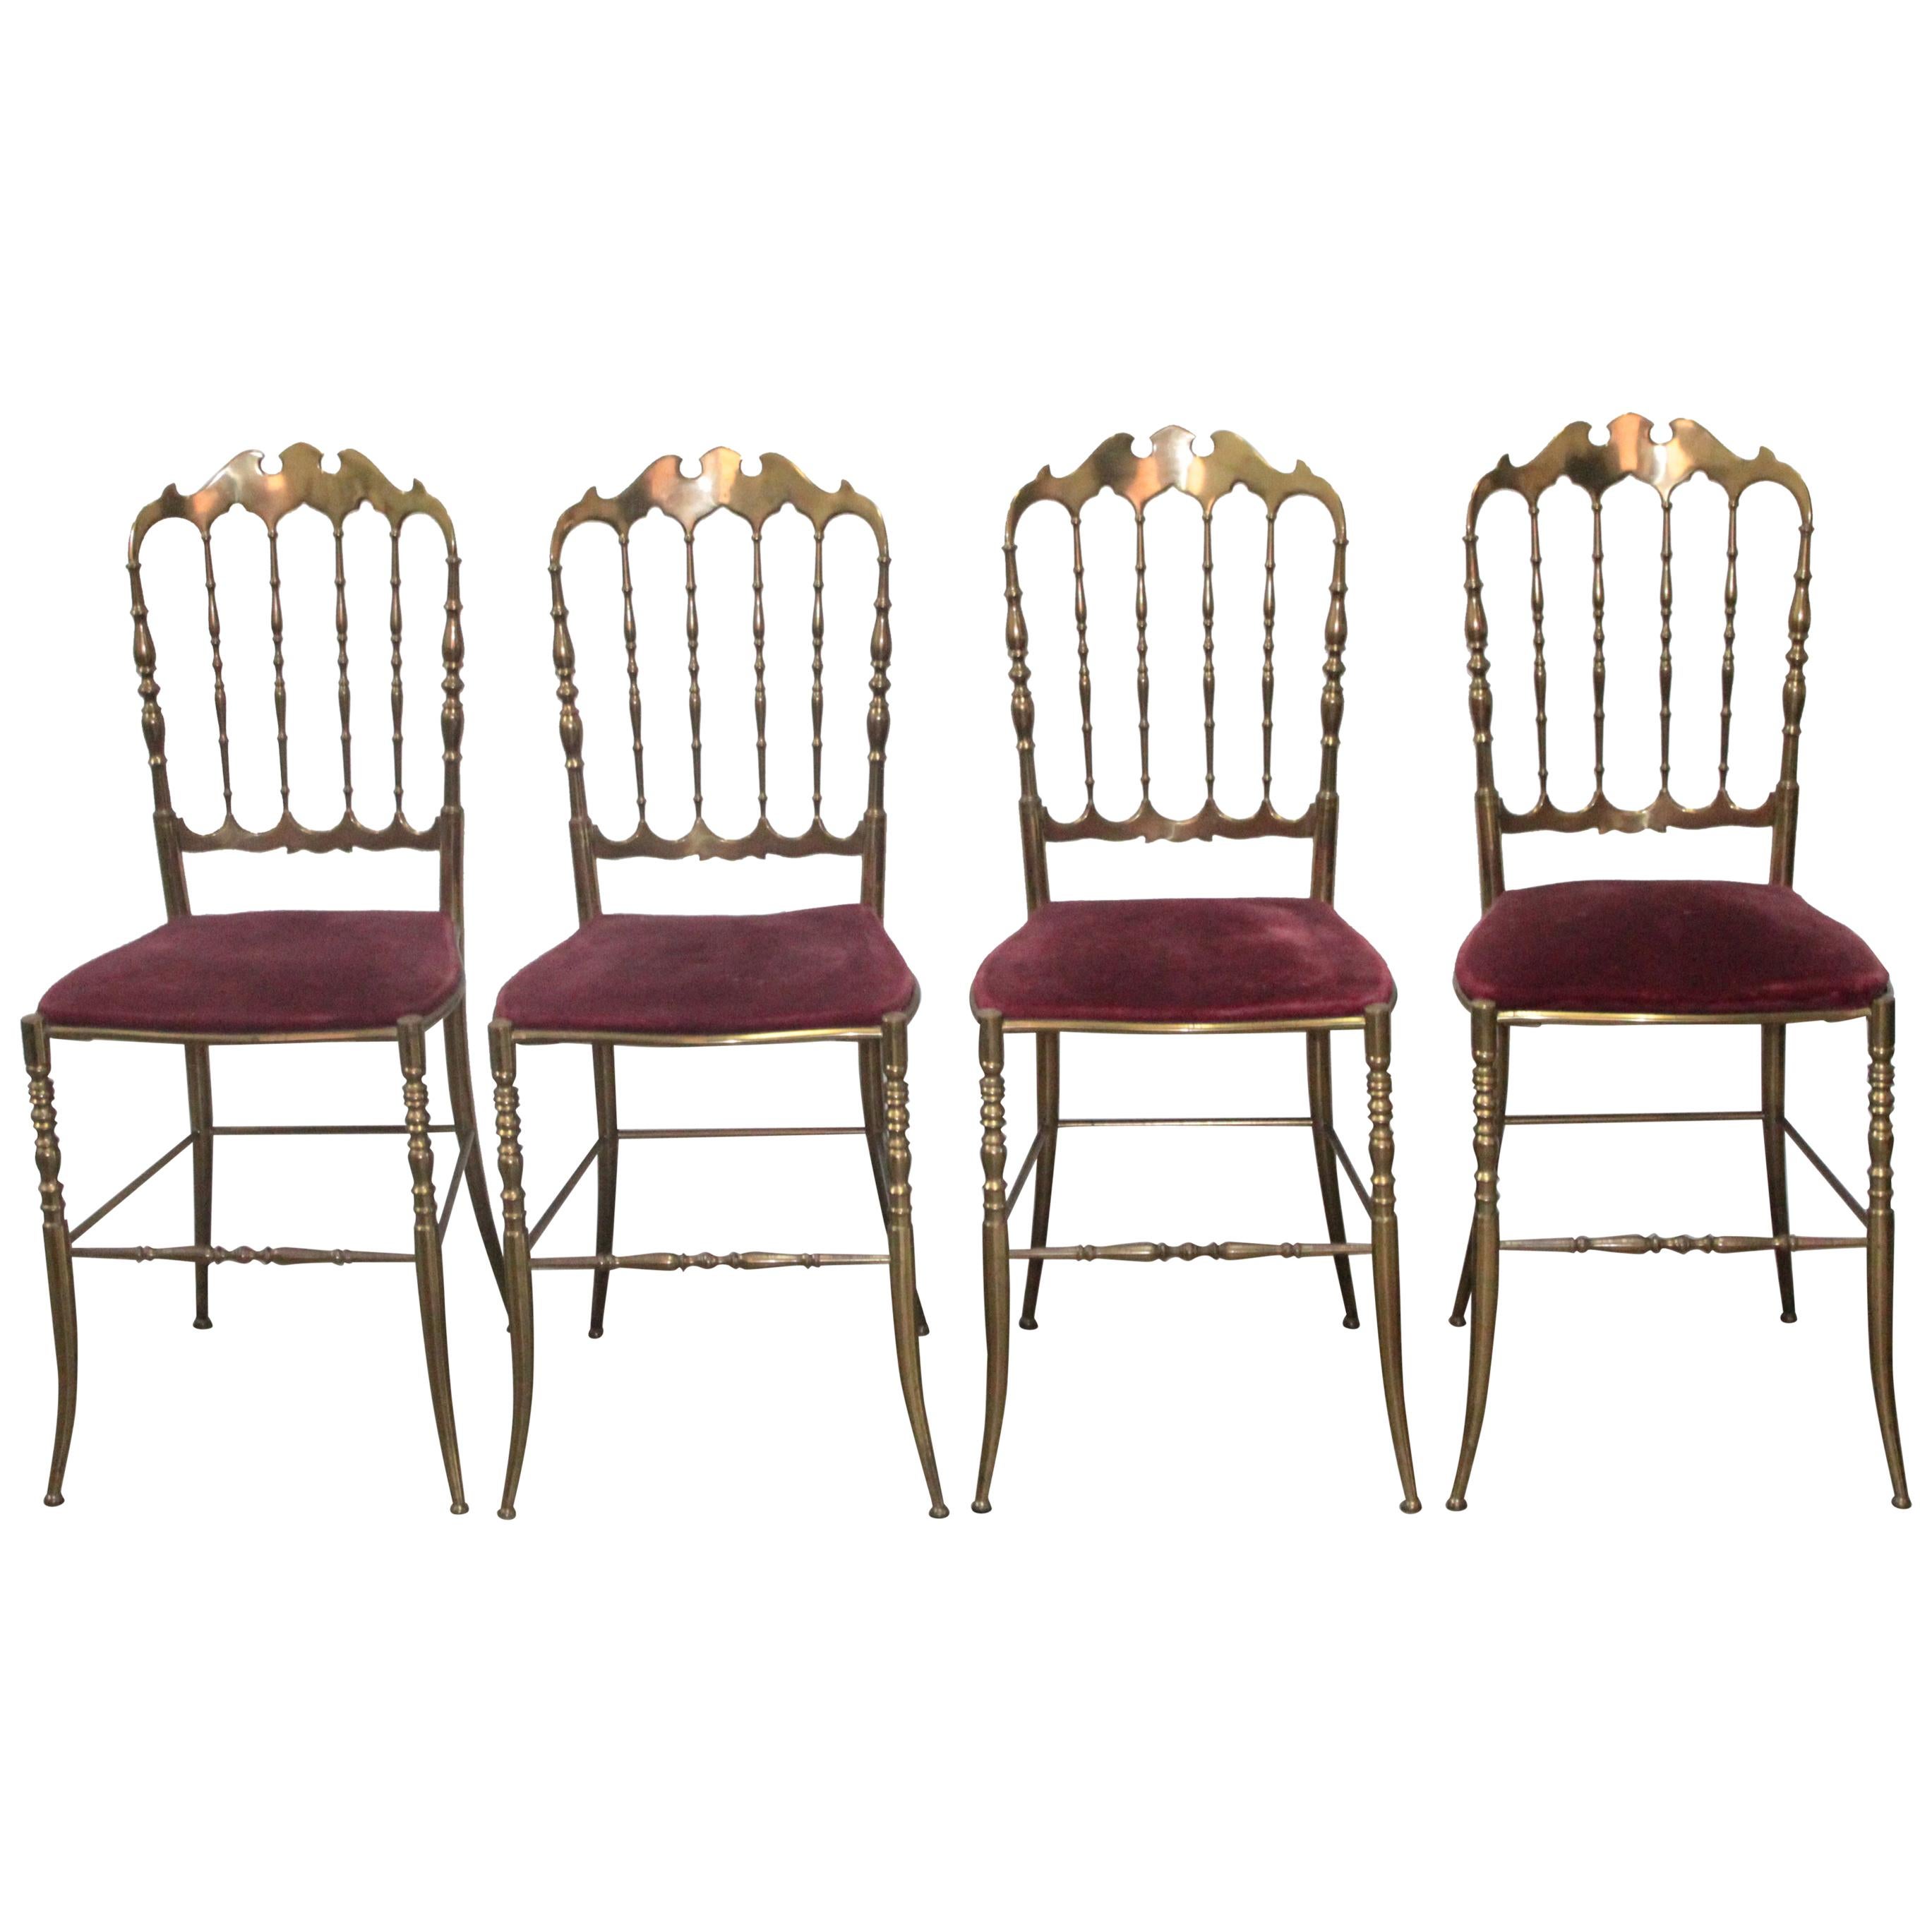 Set of 4 Italian Vintage Brass Hollywood Regency Dining Chairs by Chiavari